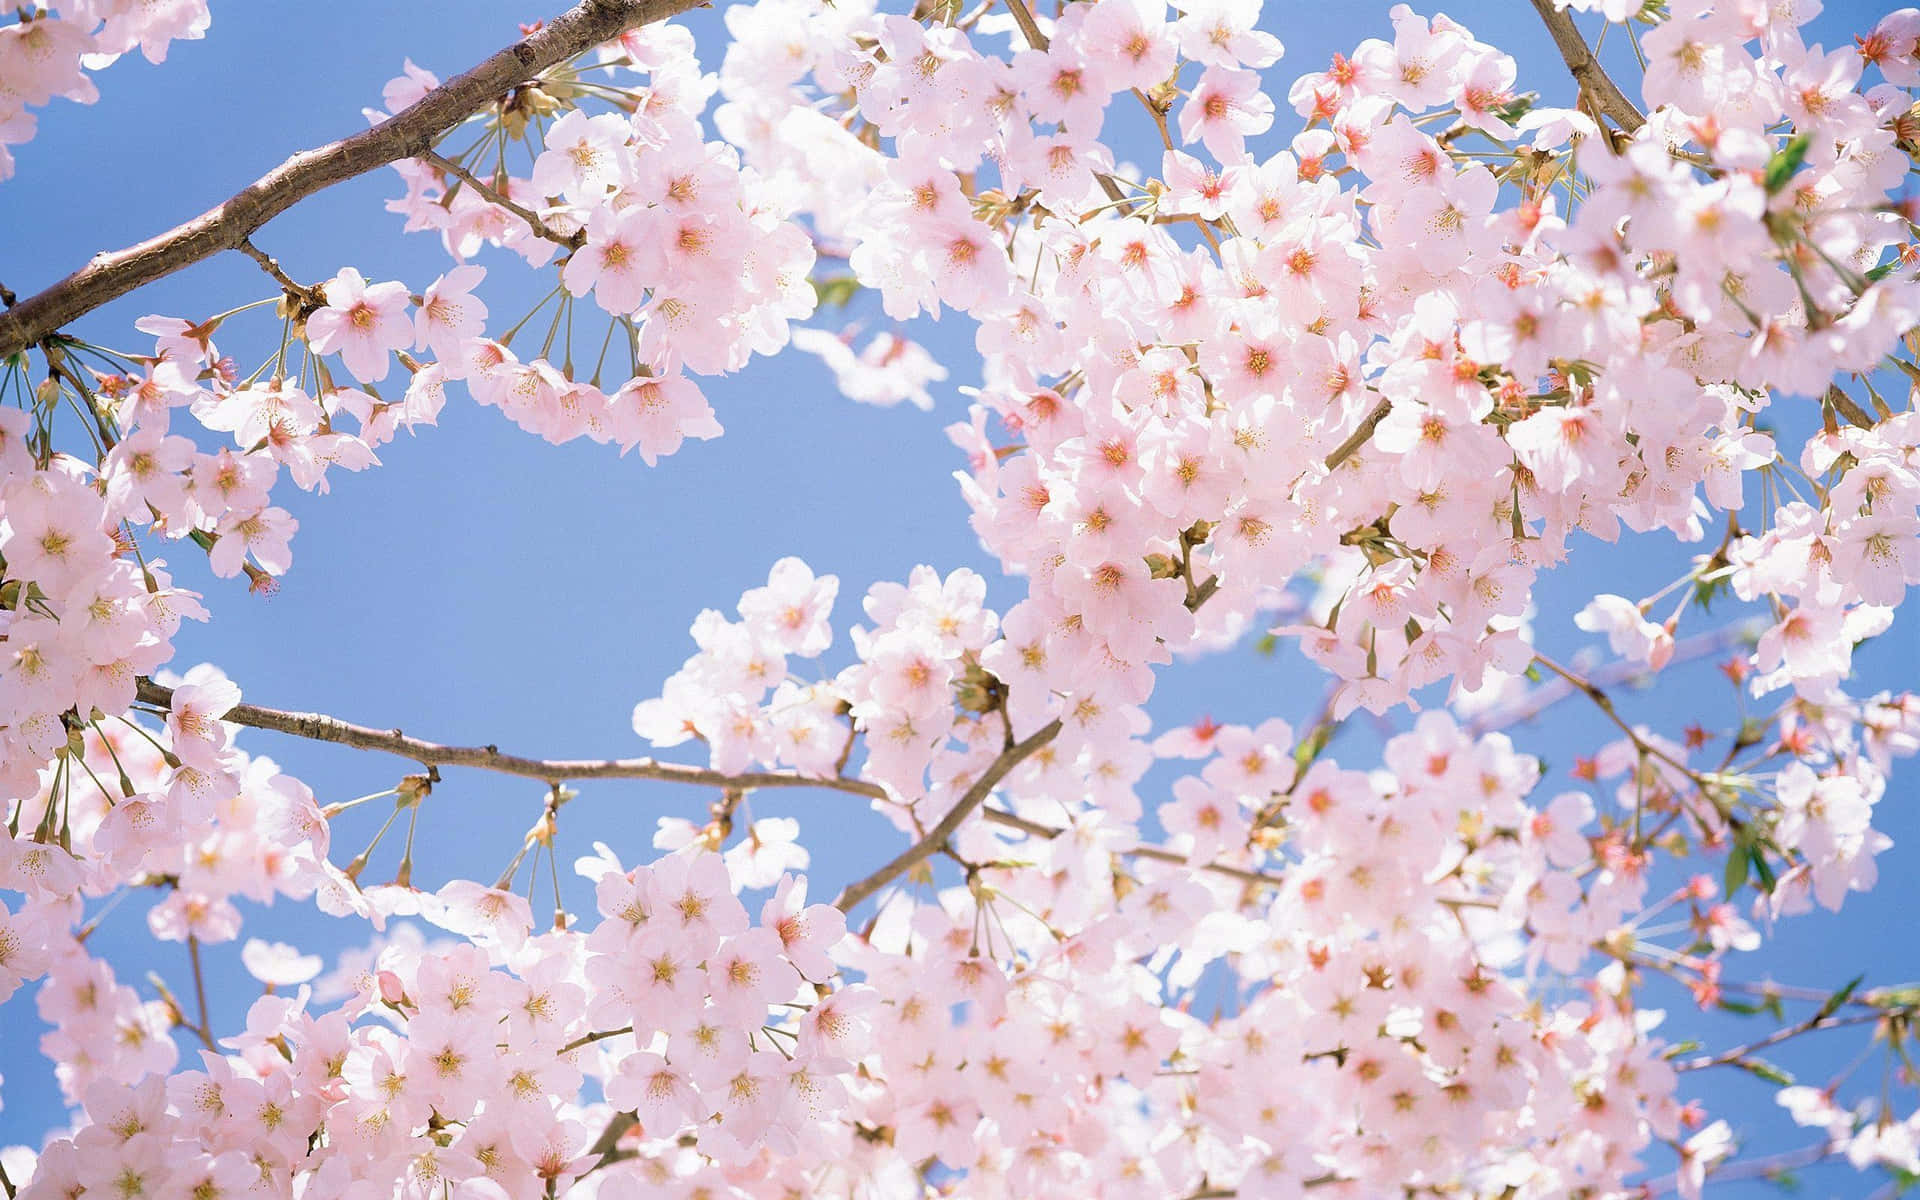 Blooming Trees during Spring Season Wallpaper